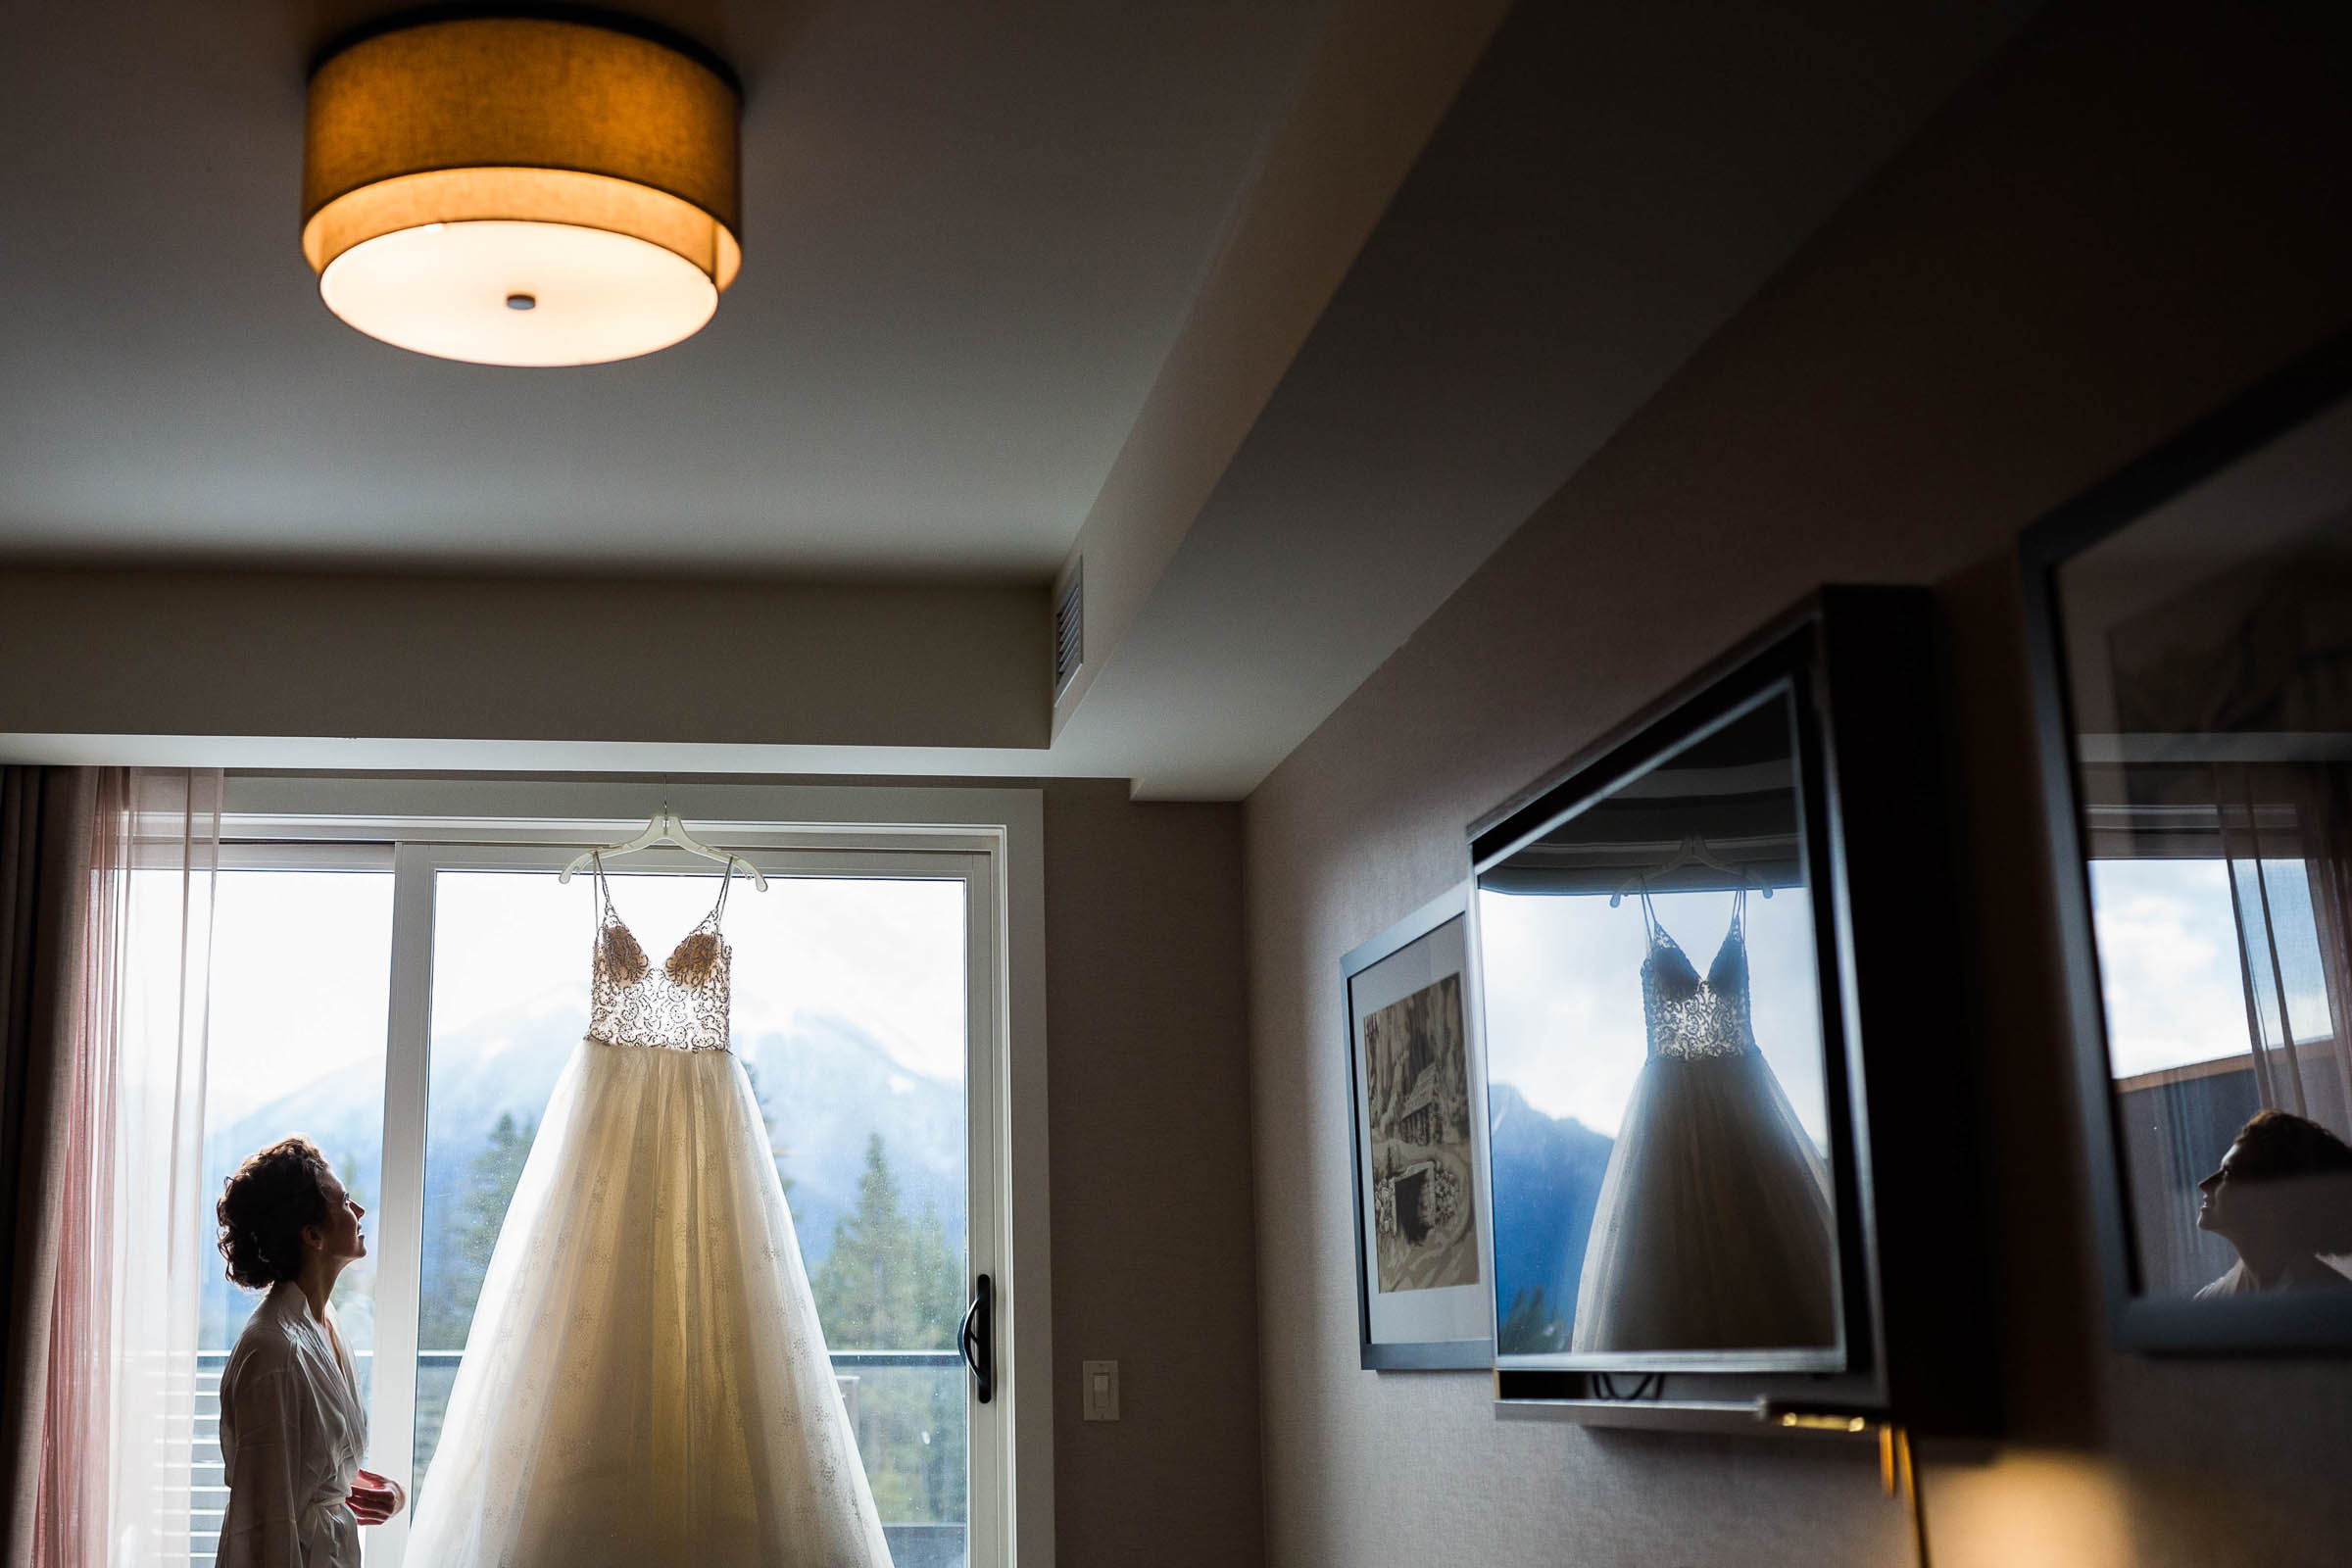 Bride admiring her wedding dress in the light of the window